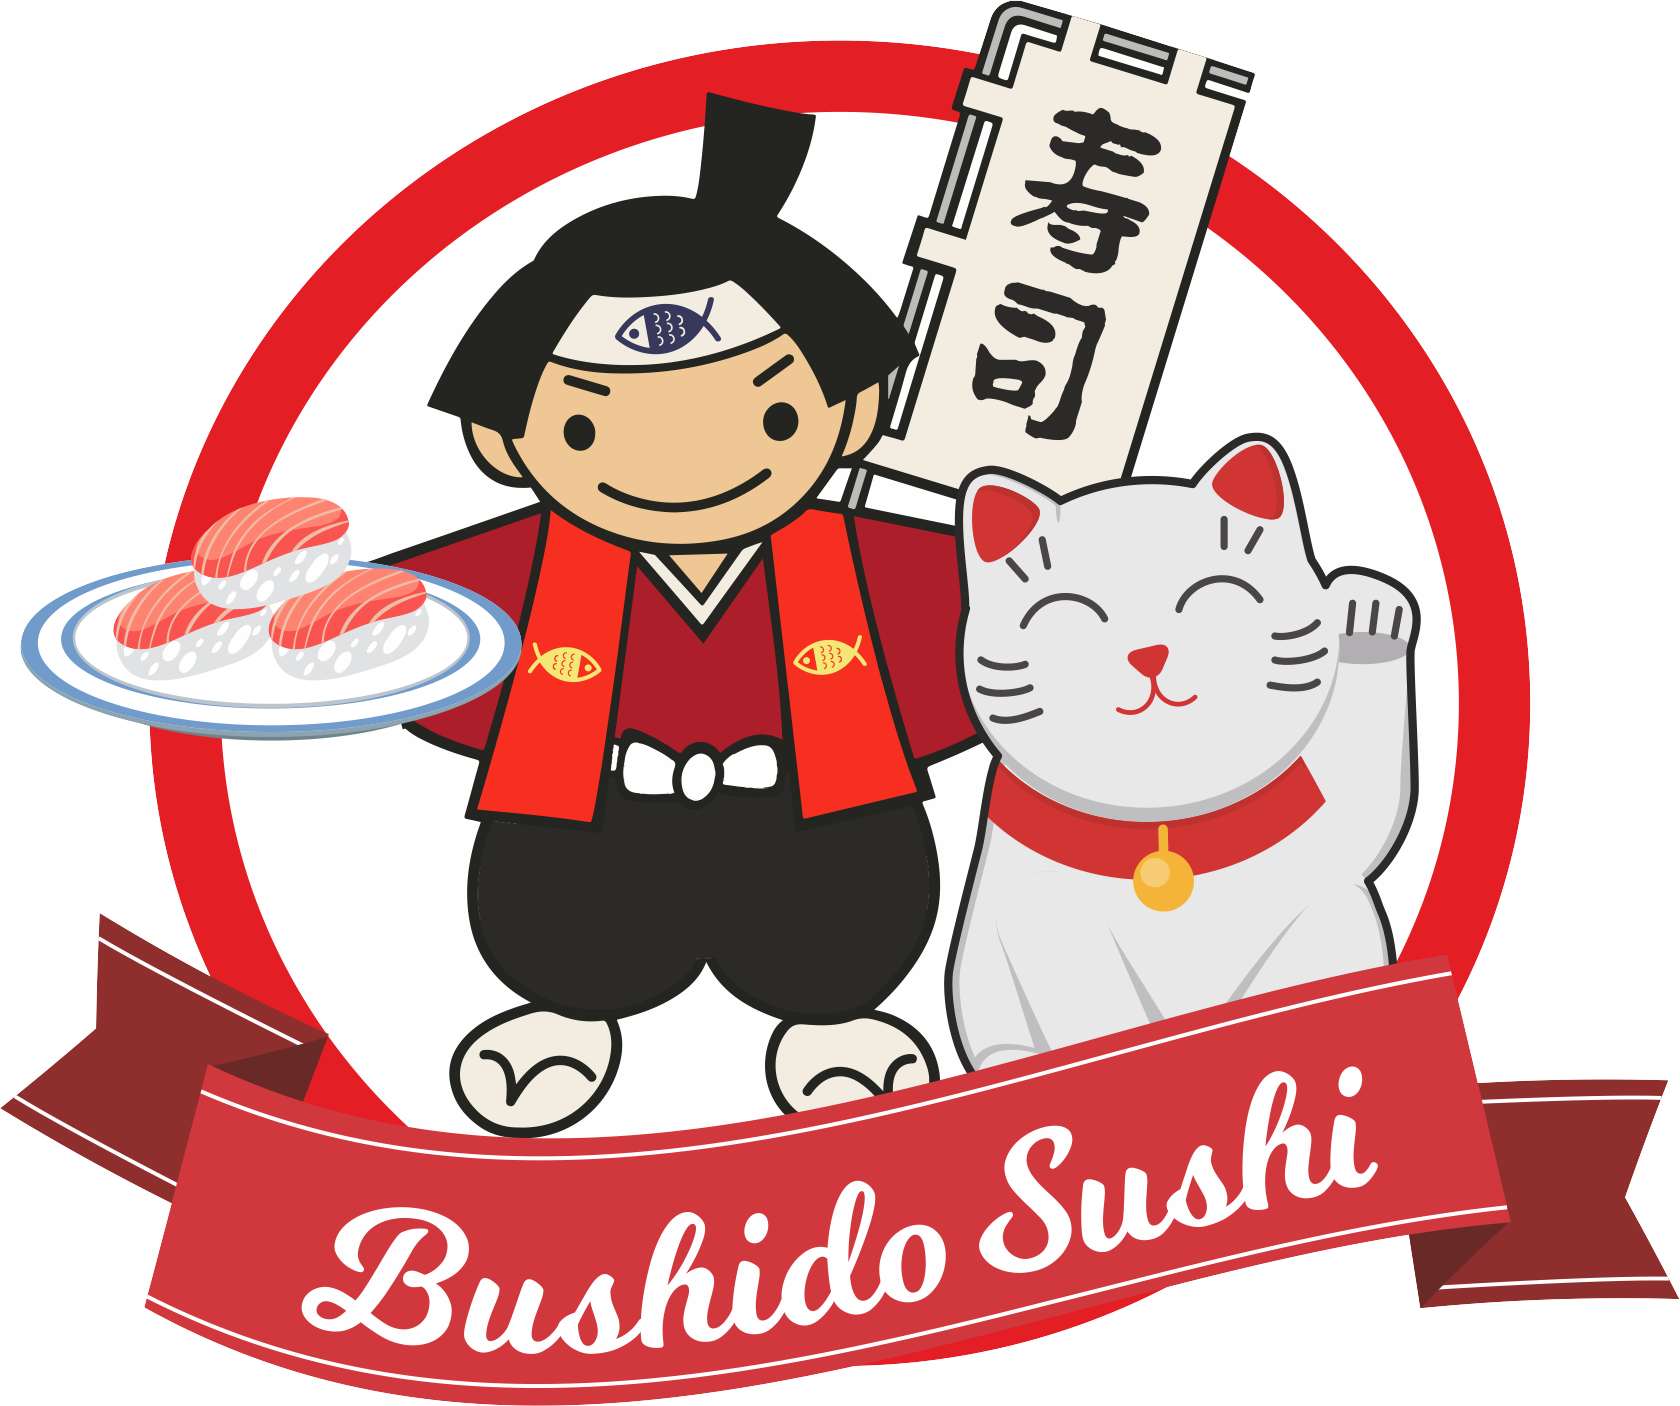 bushido_logo